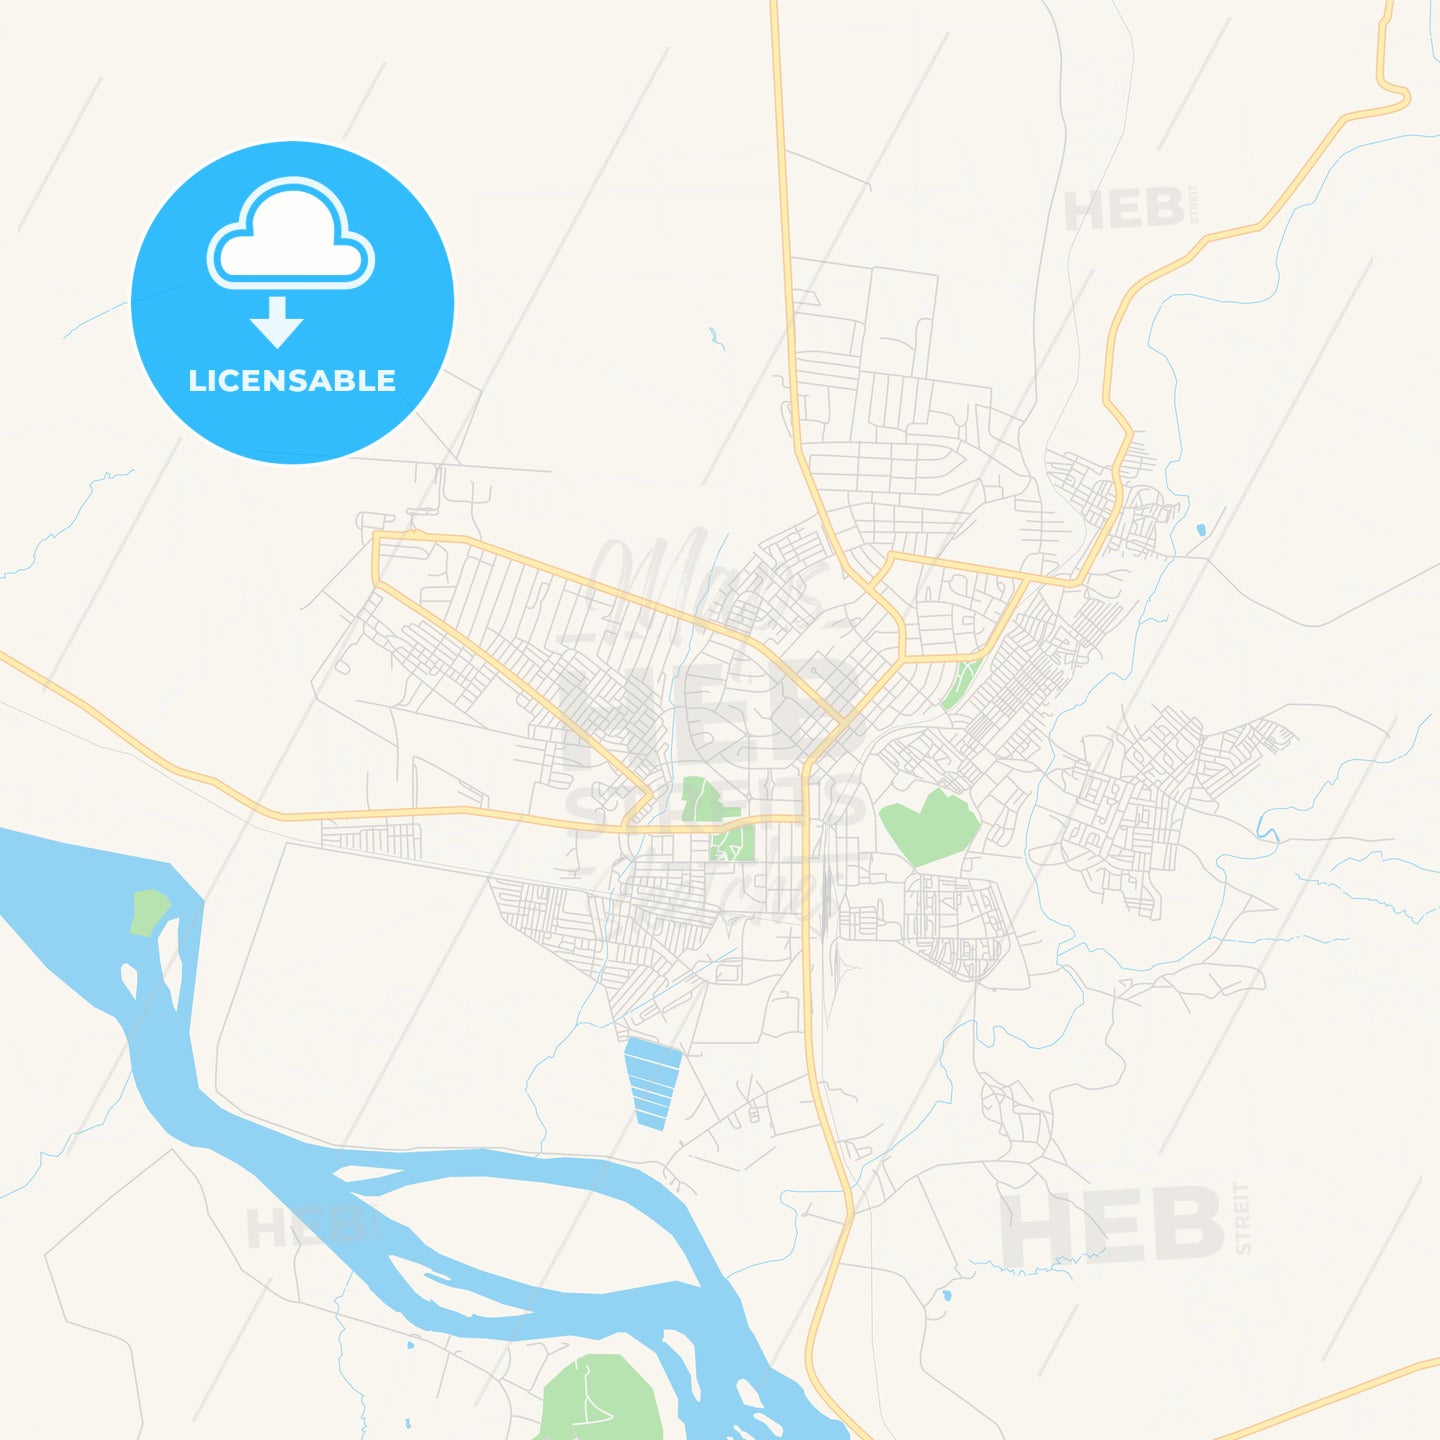 Printable street map of Livingstone, Zambia